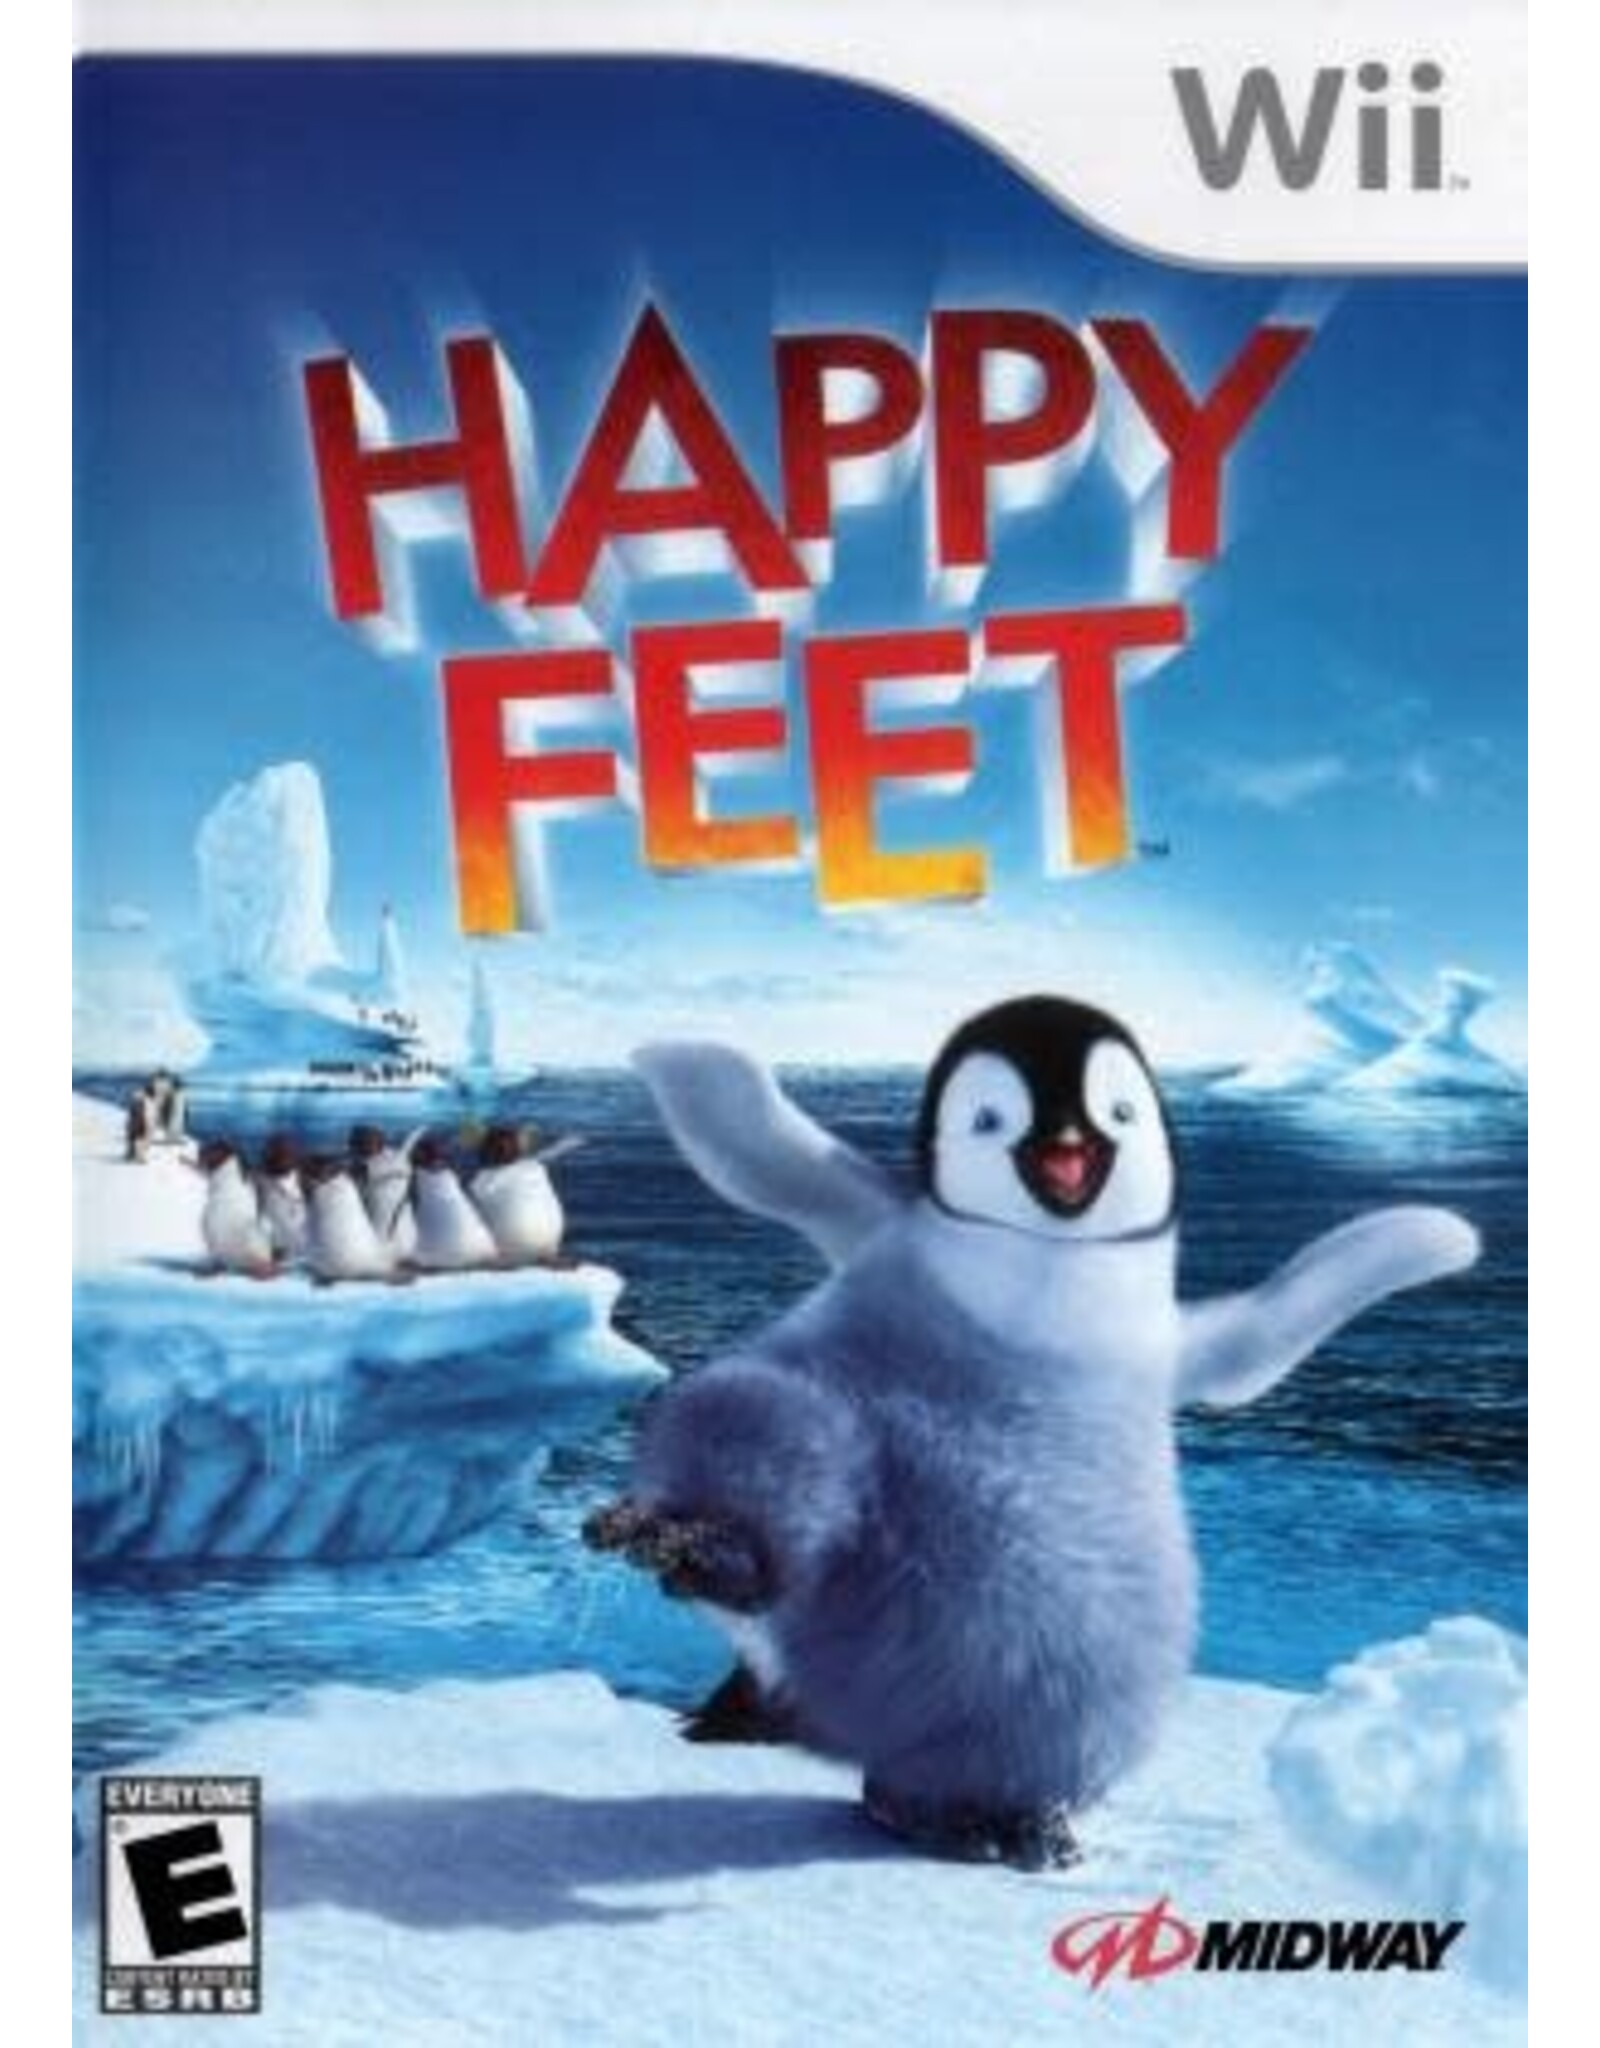 Wii Happy Feet (Used, No Manual)